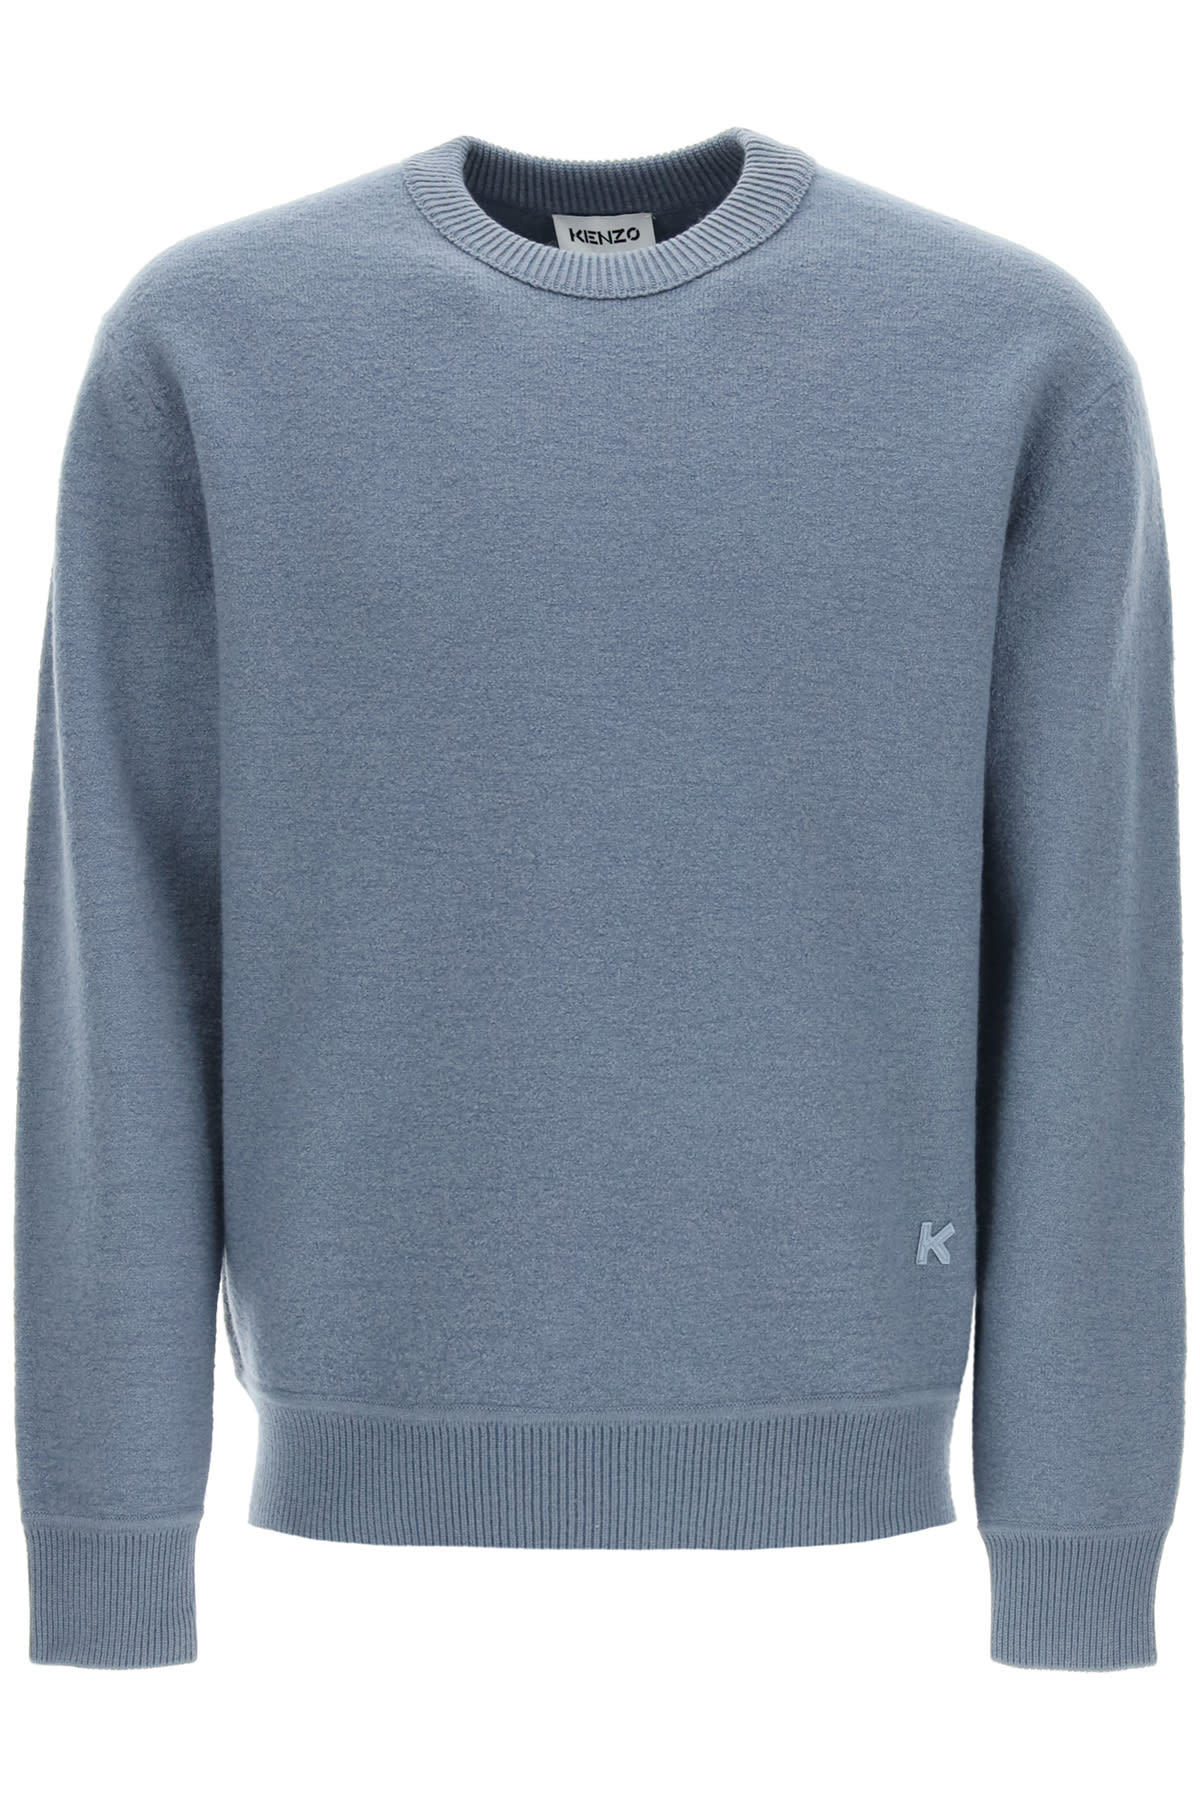 Kenzo Crew Neck Sweater K Logo